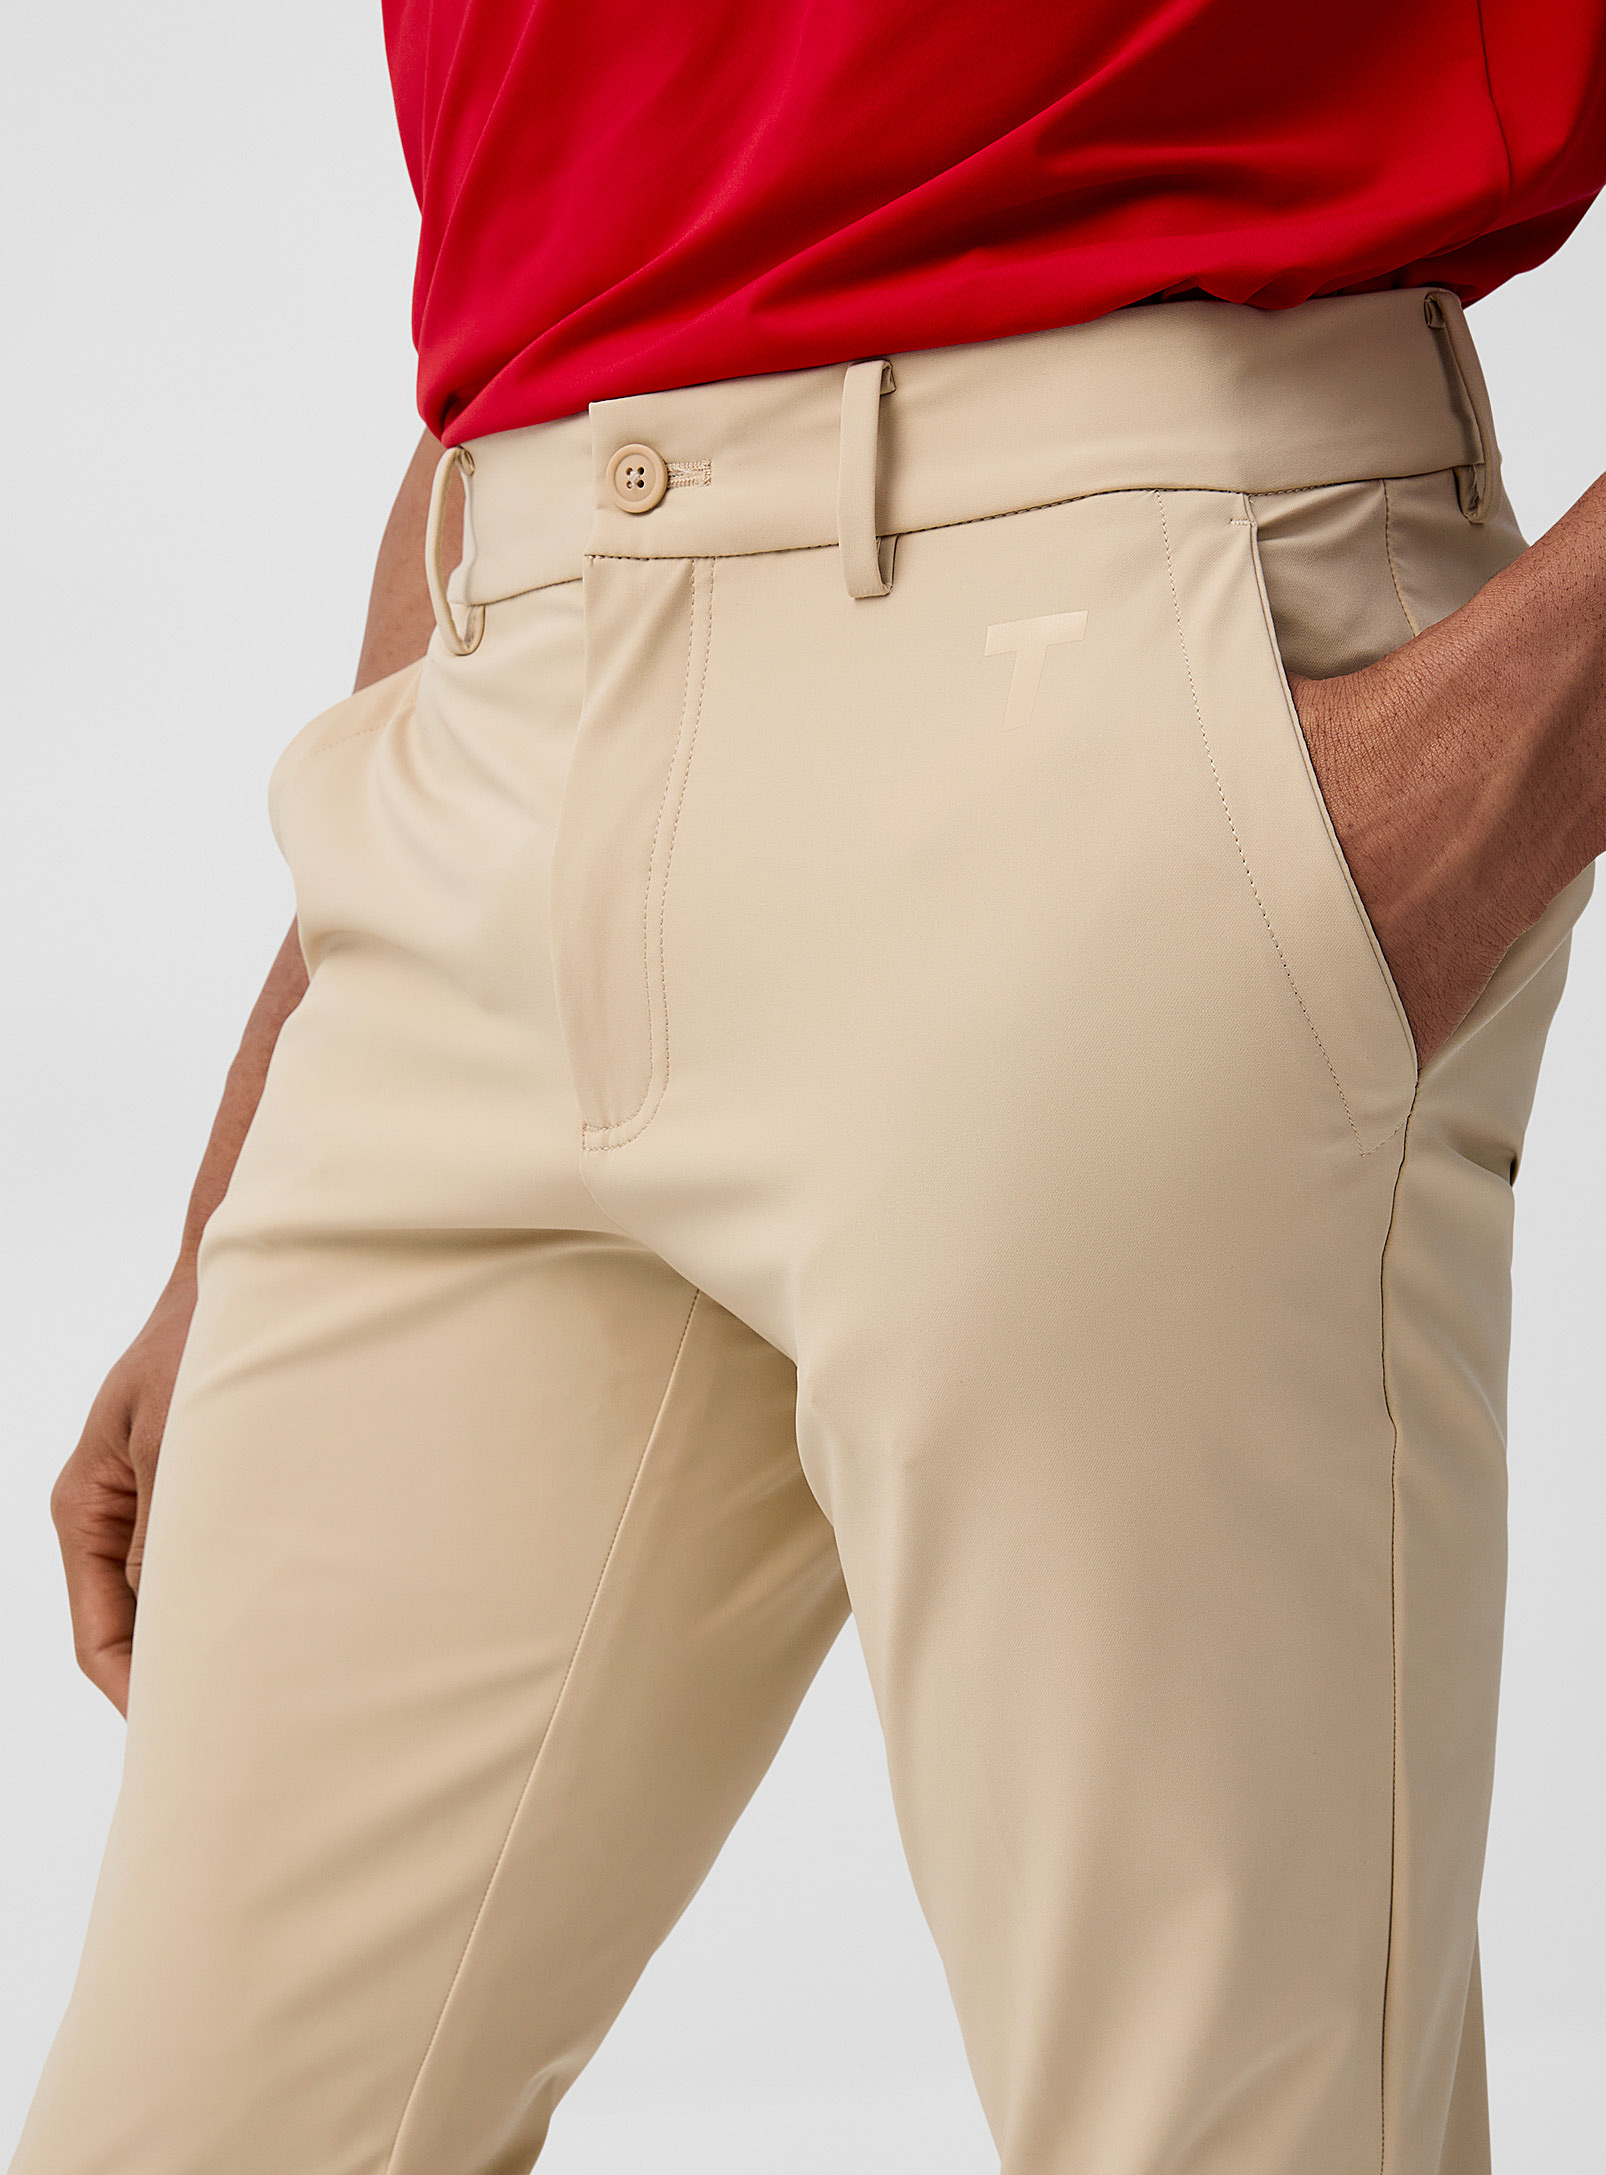 Tilley - Le pantalon de golf extensible jambe fuselée